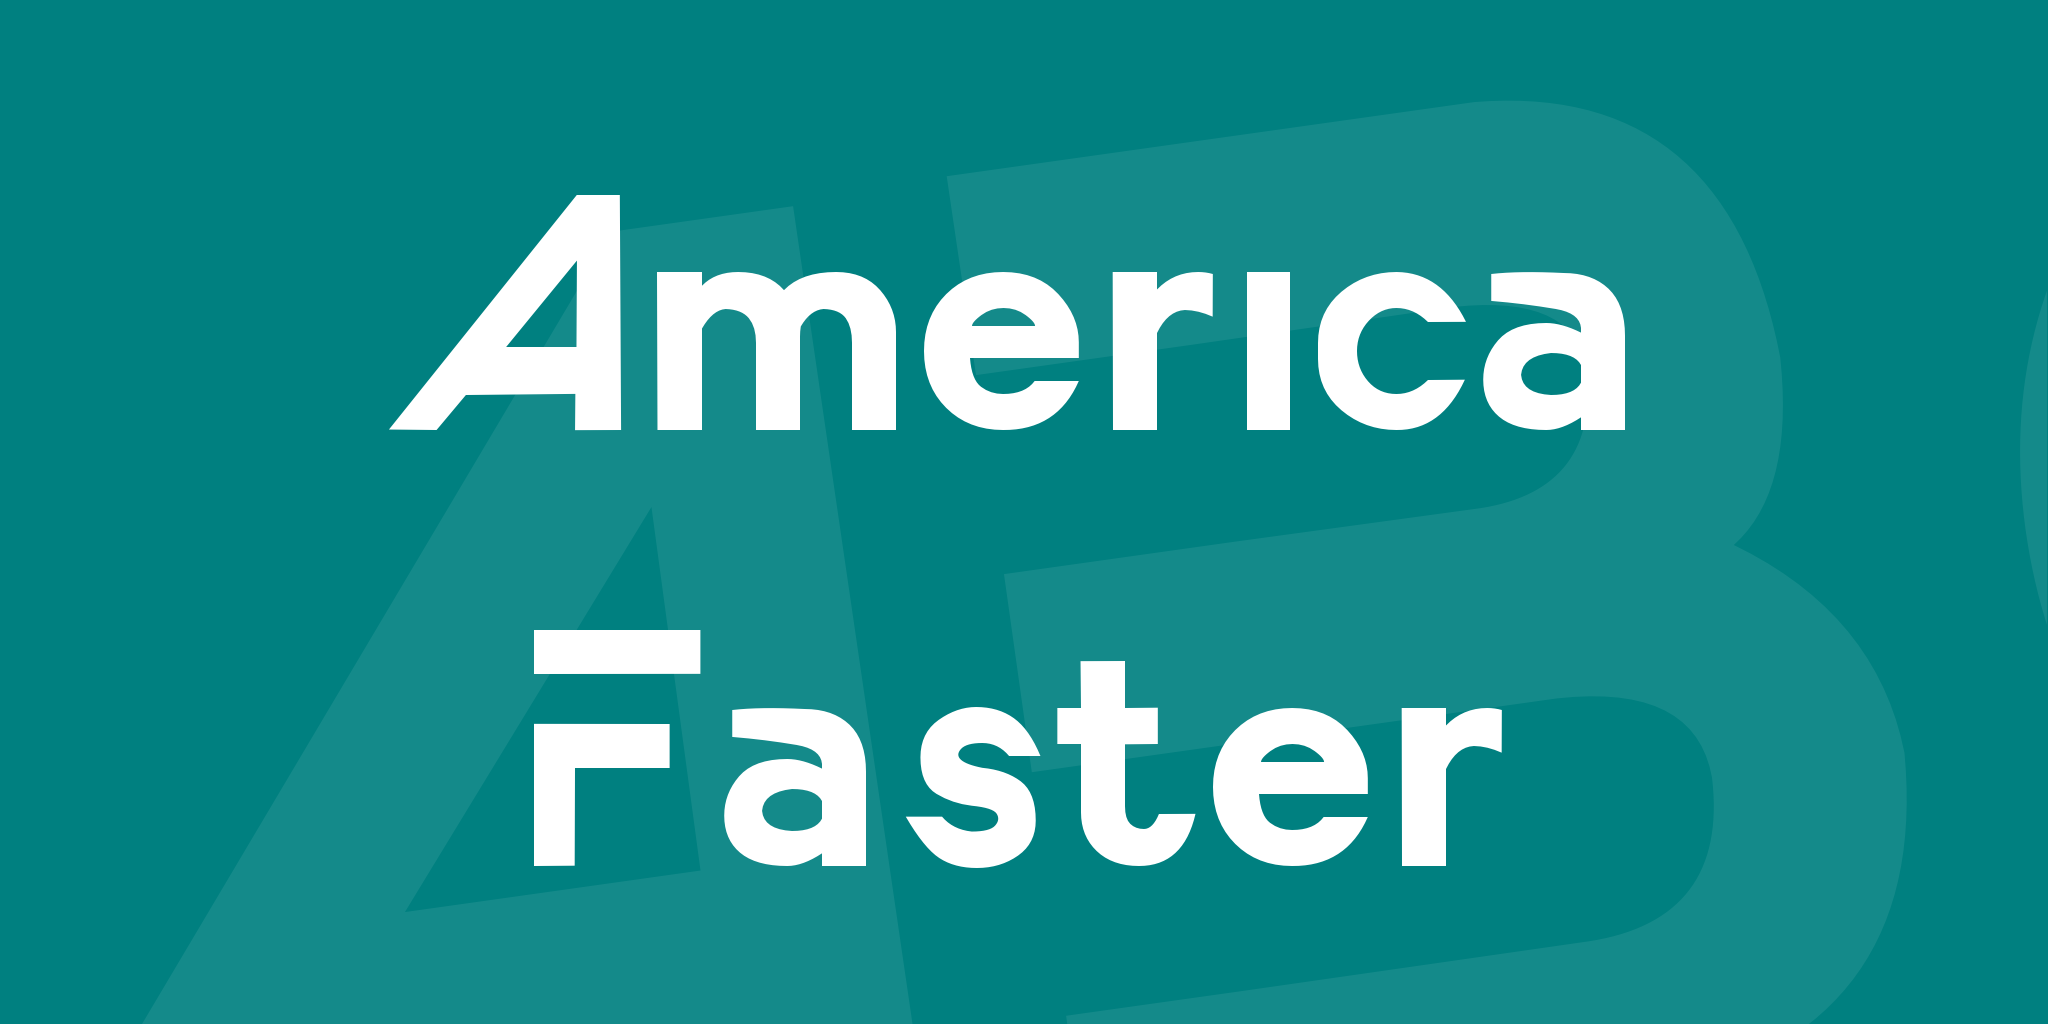 America Faster